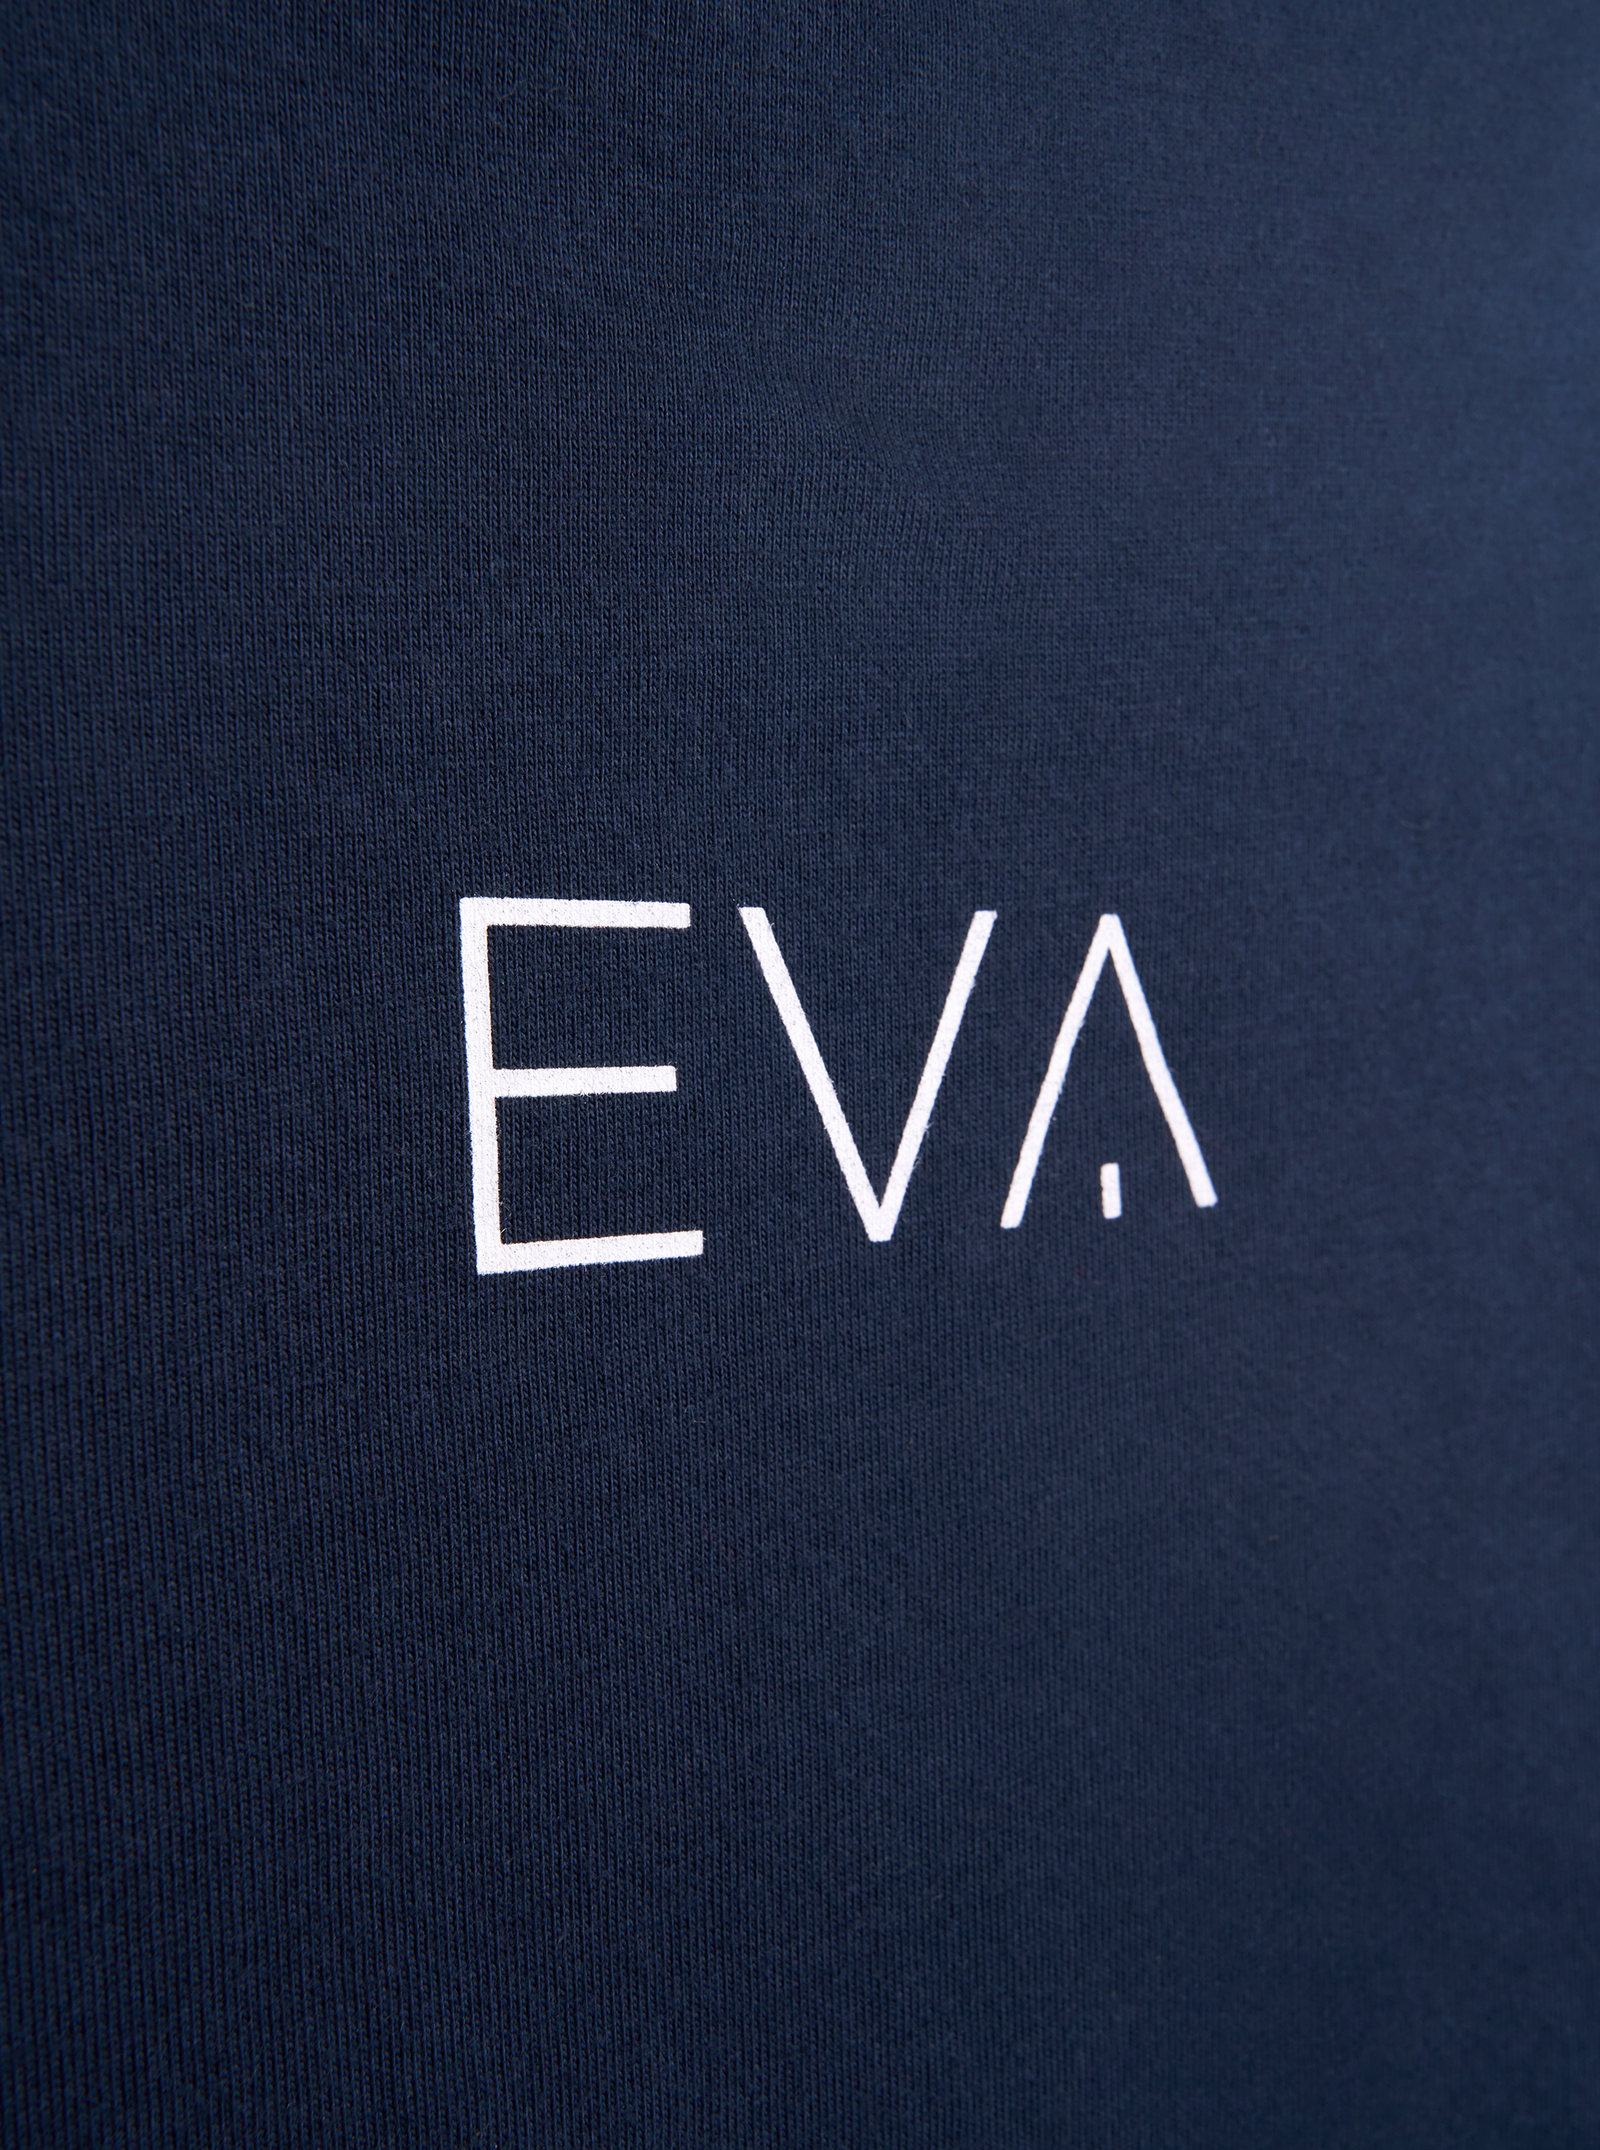 T-shirt EVA Navy